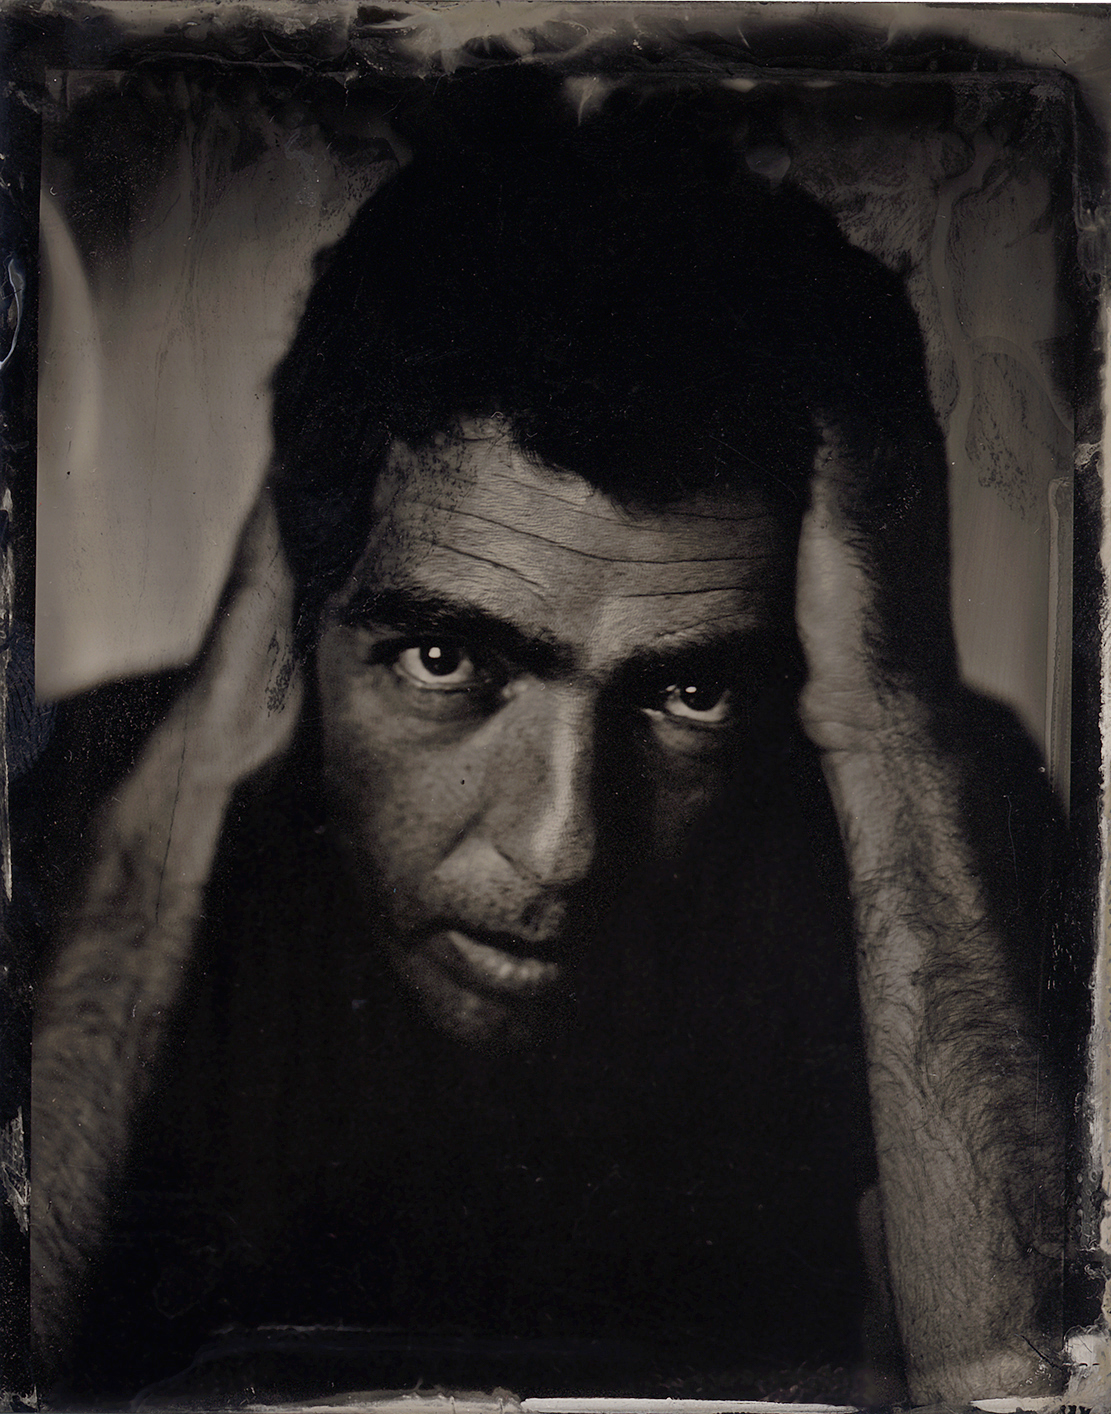 tintype portrait Portraiture art black and white wet collodion process